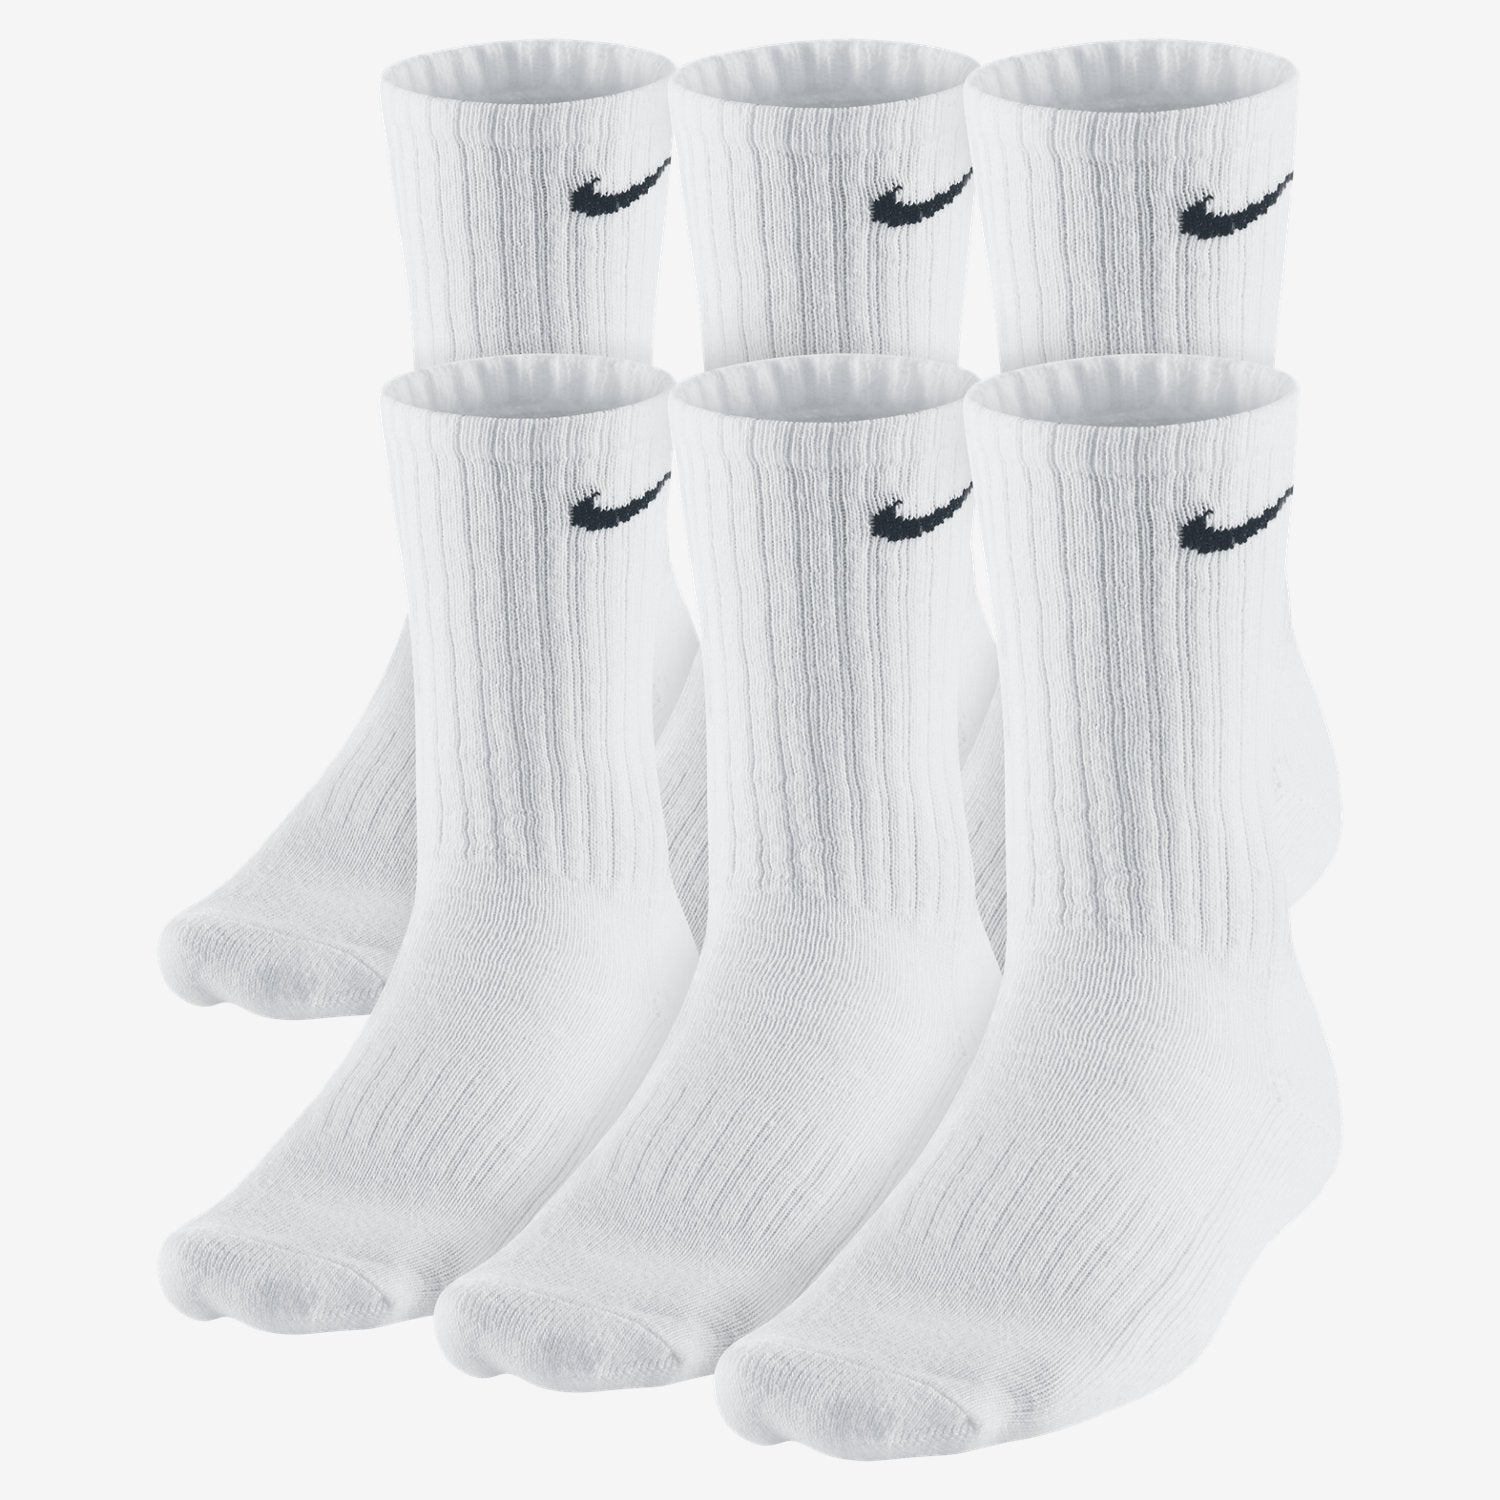 Nike + Performance Cotton Crew Socks (6-pack)